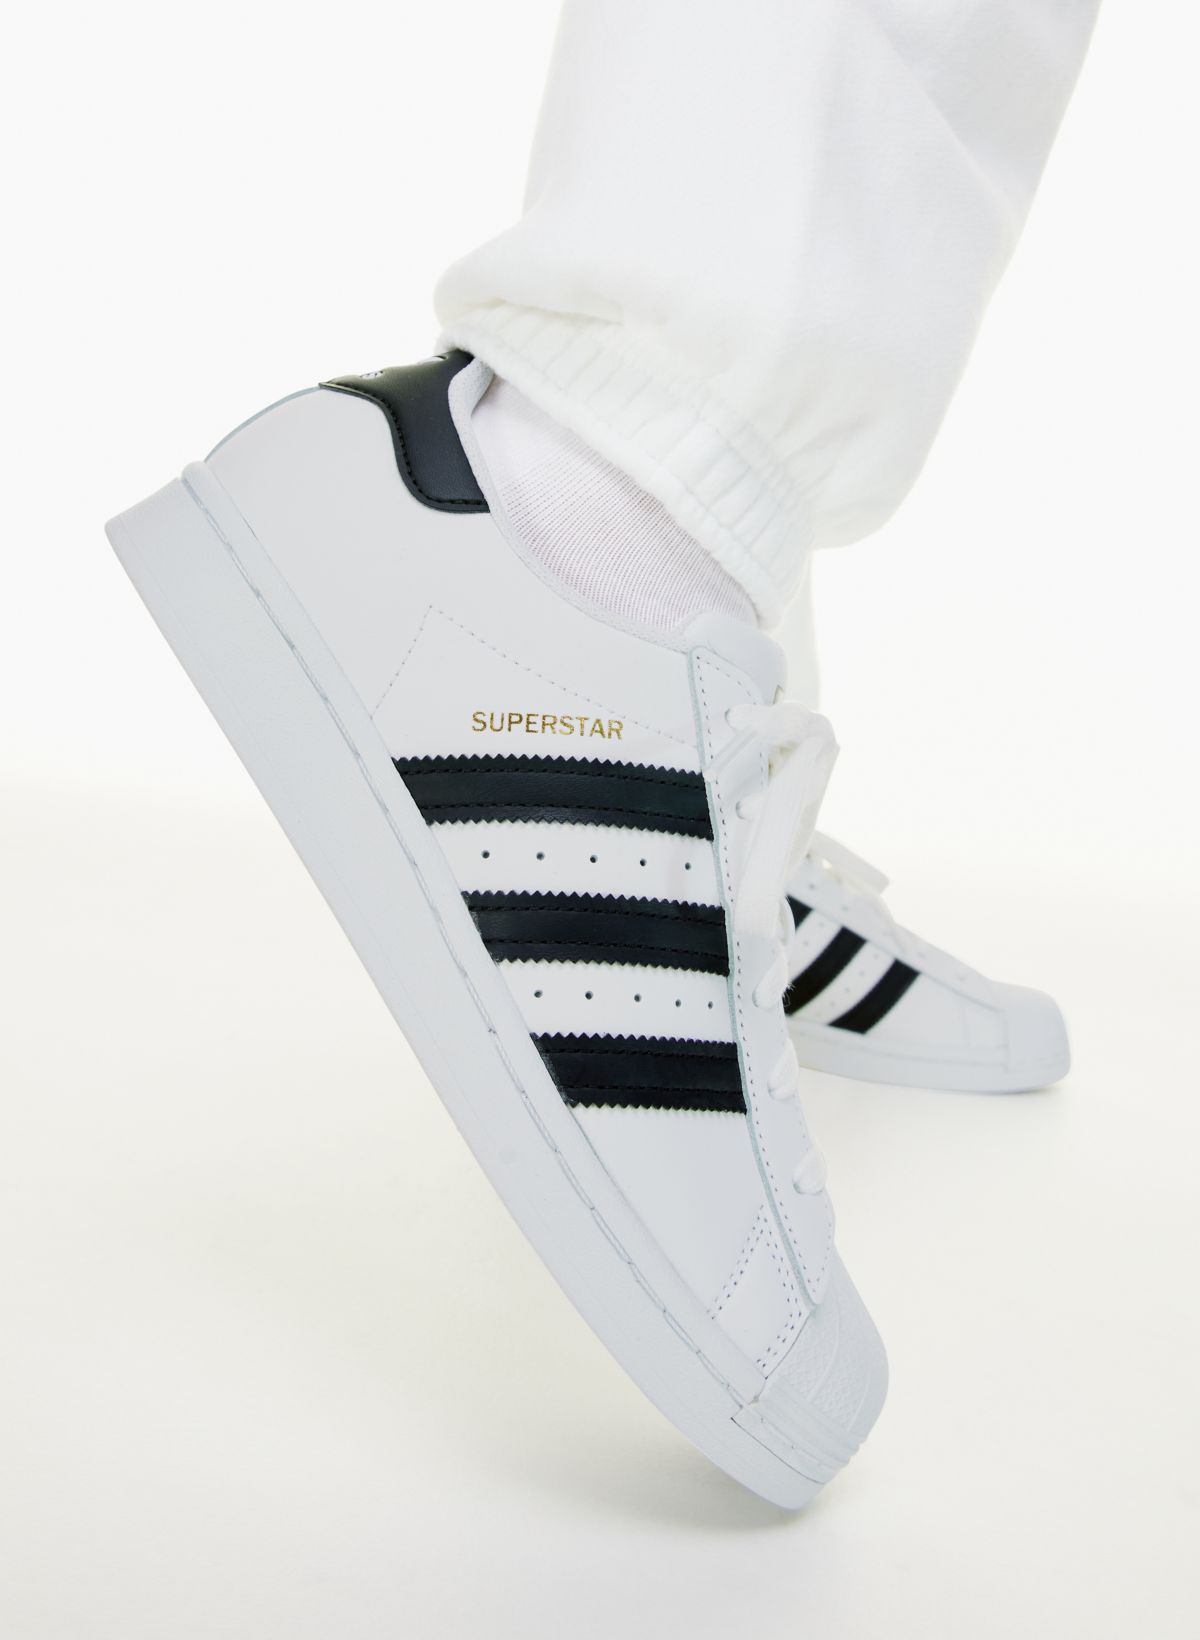 Vintage Adidas Superstar Shoes Shell Toe Three Stripe Men's Size 9 - eSale